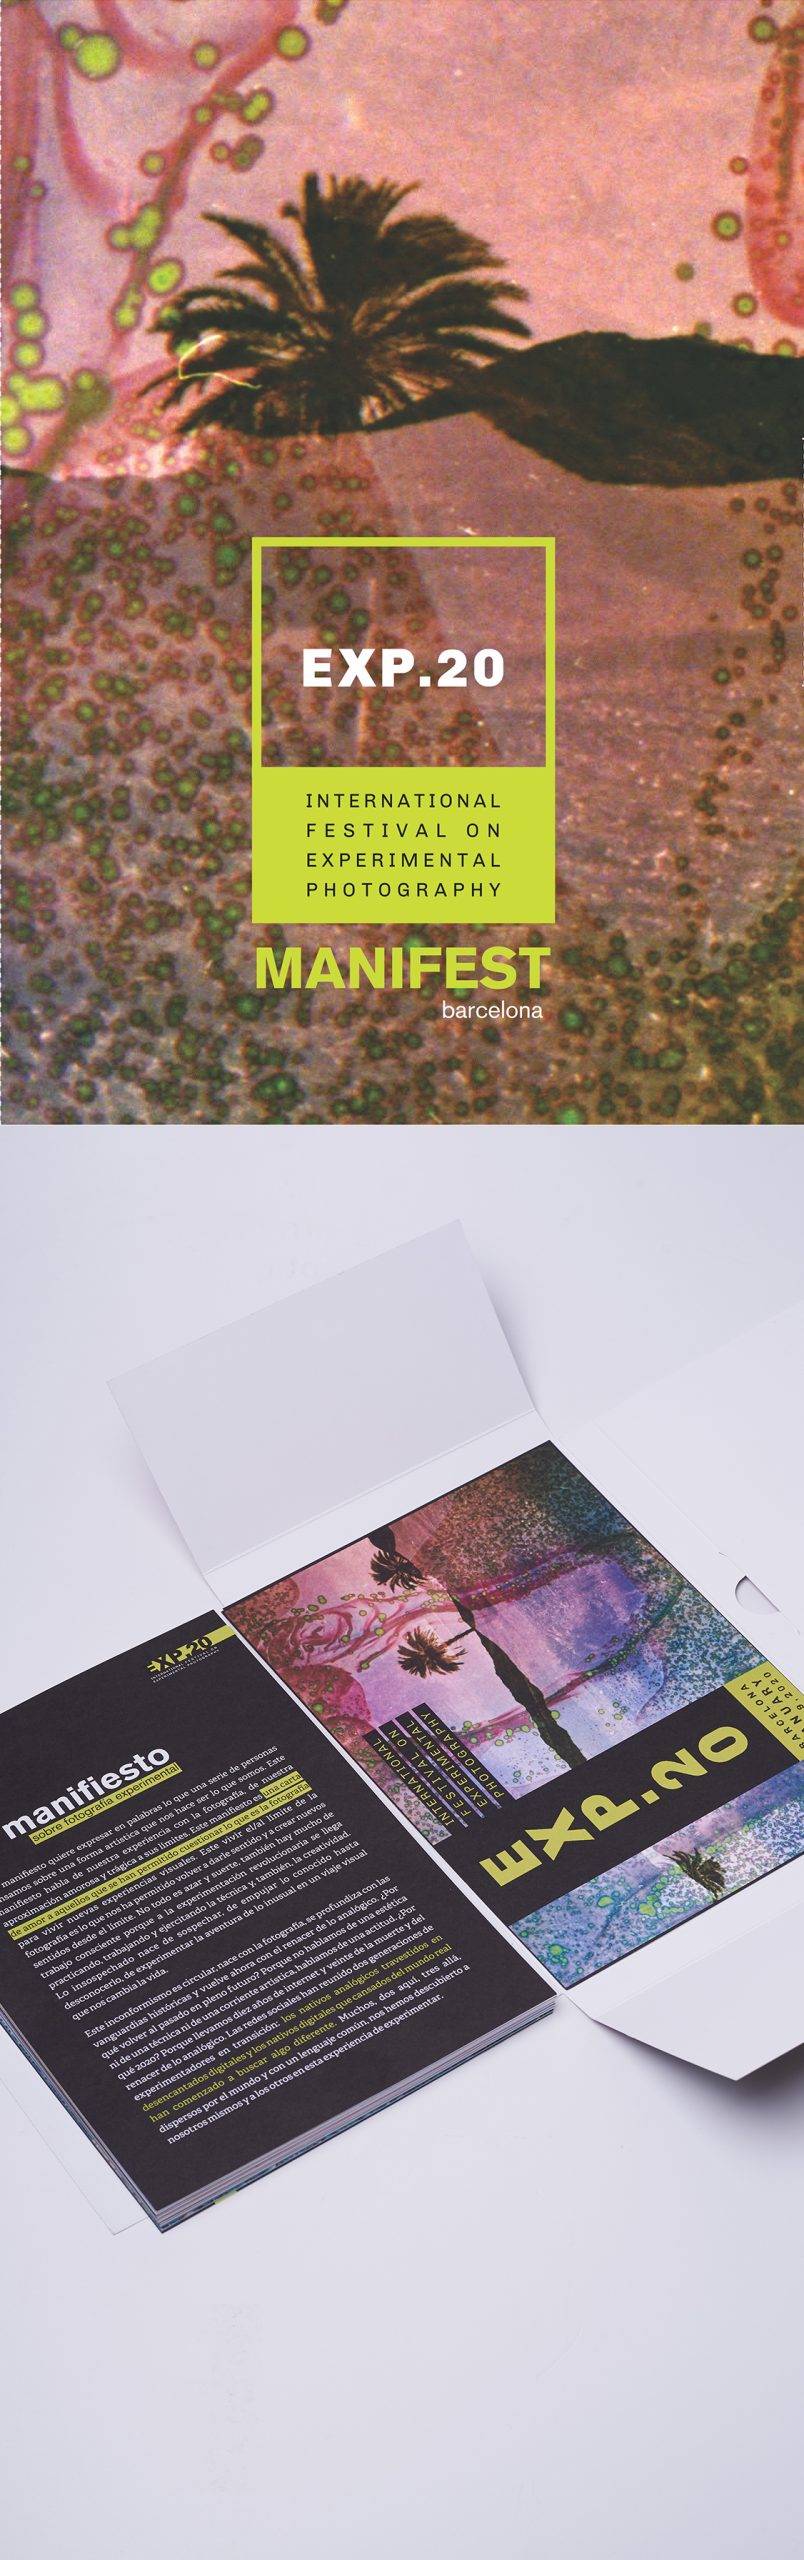 EXP.20 Manifest